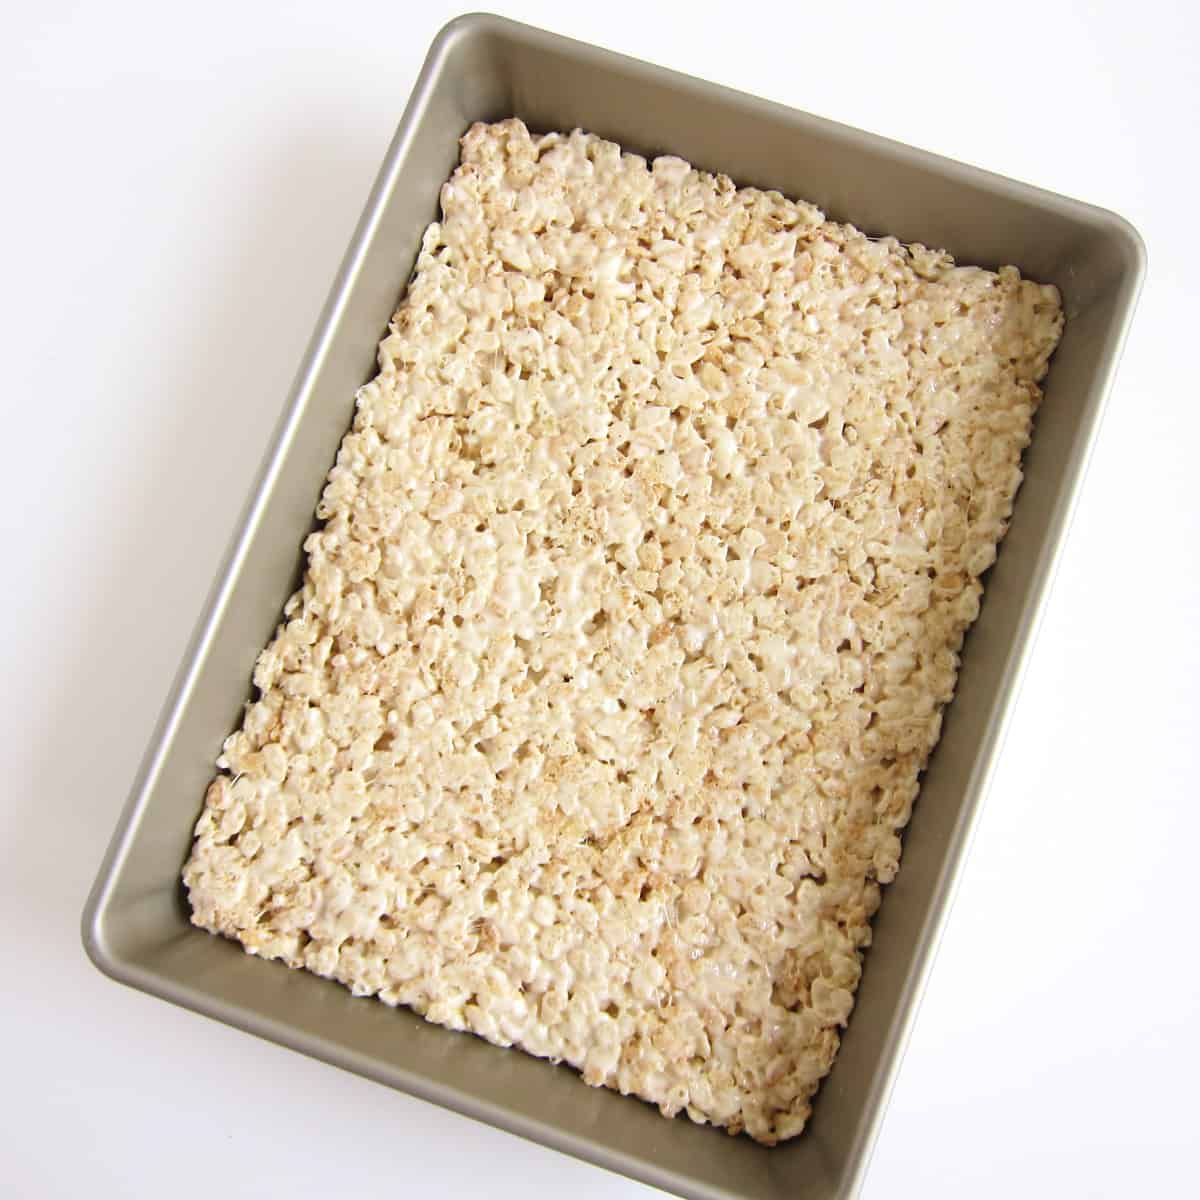 White chocolate Rice Krispie Treats spread into a 9x13-inch baking pan.